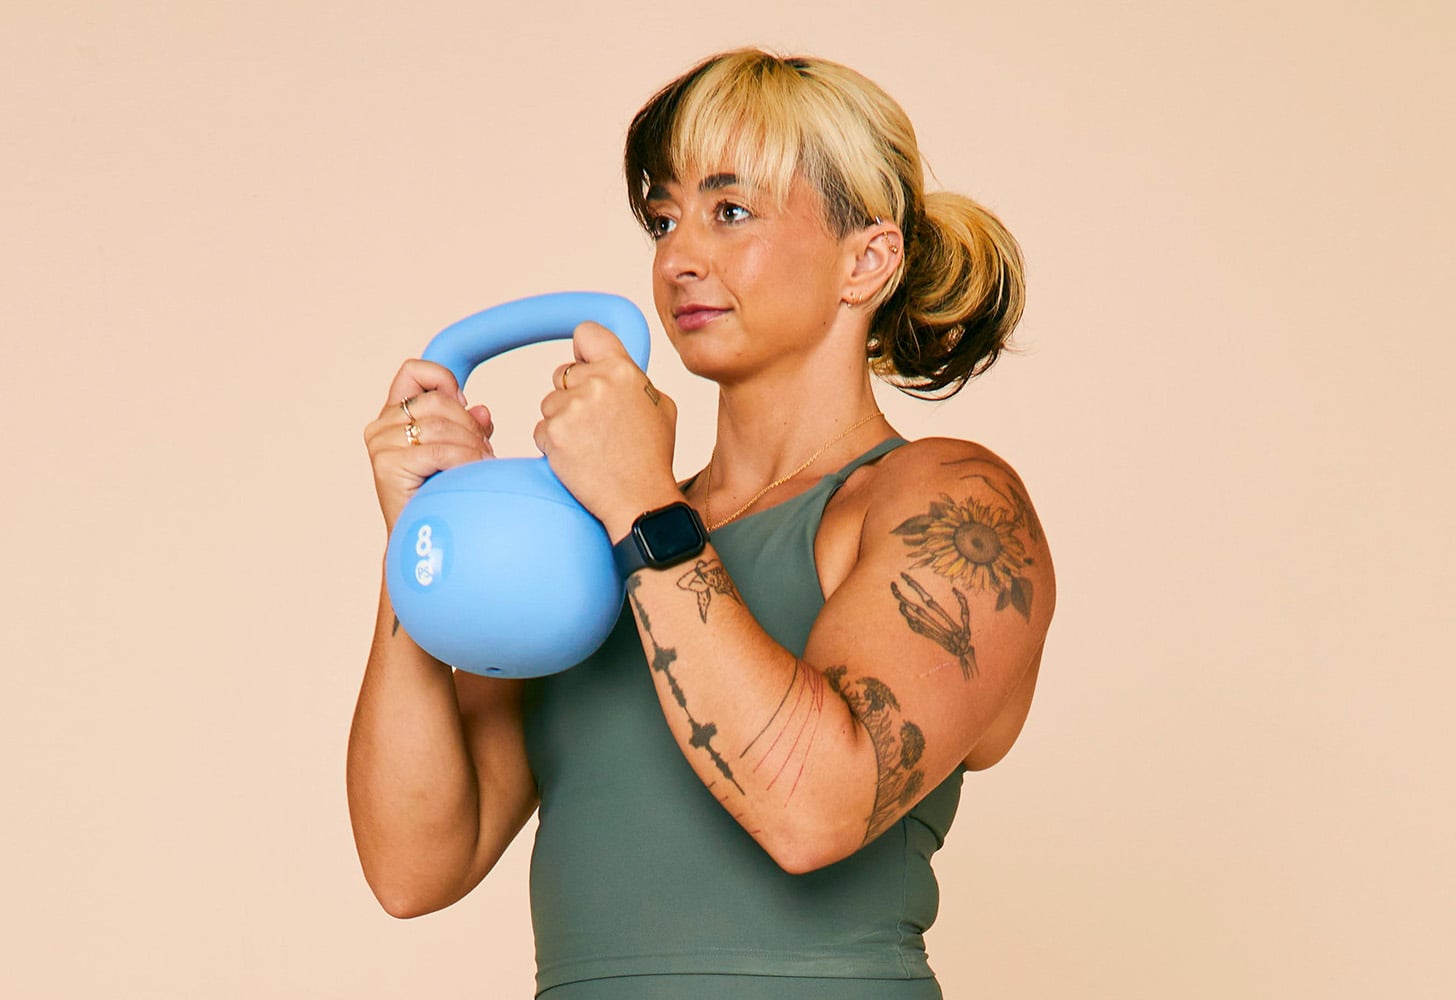 6 Best Kettlebell Exercises to Strengthen Your Back